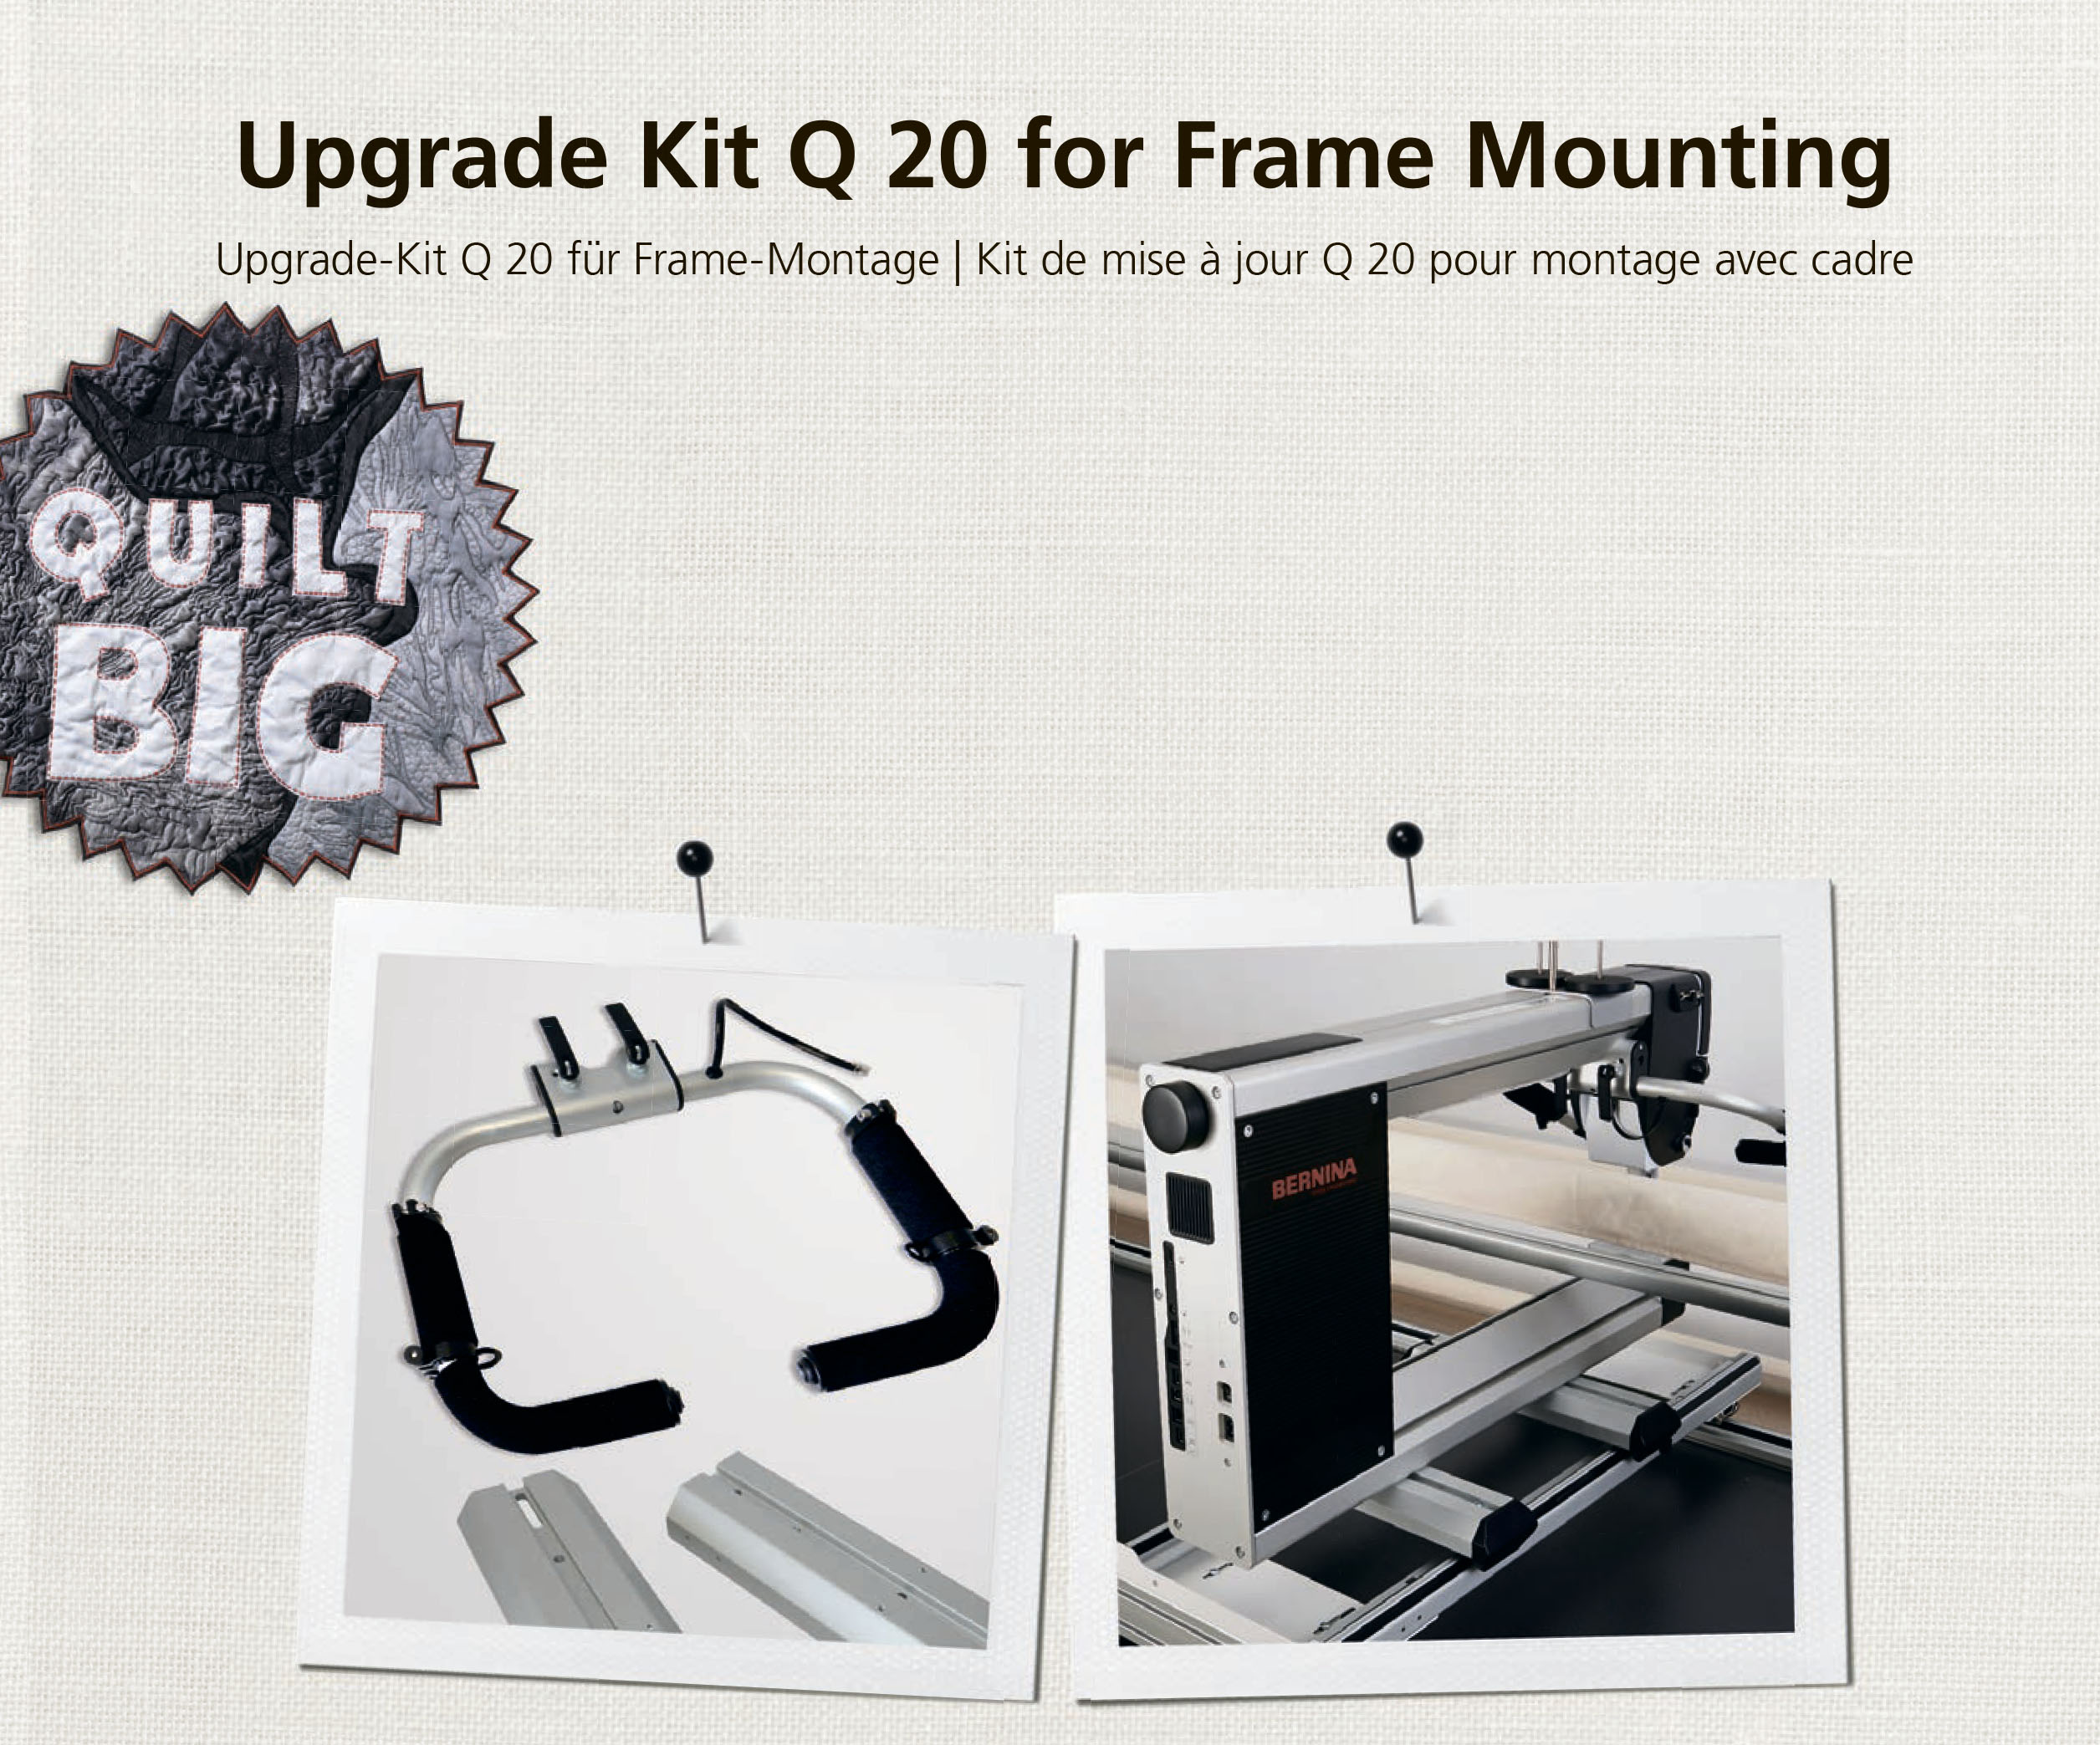 Bernina комплект обновления Q20 (upgrade kit)